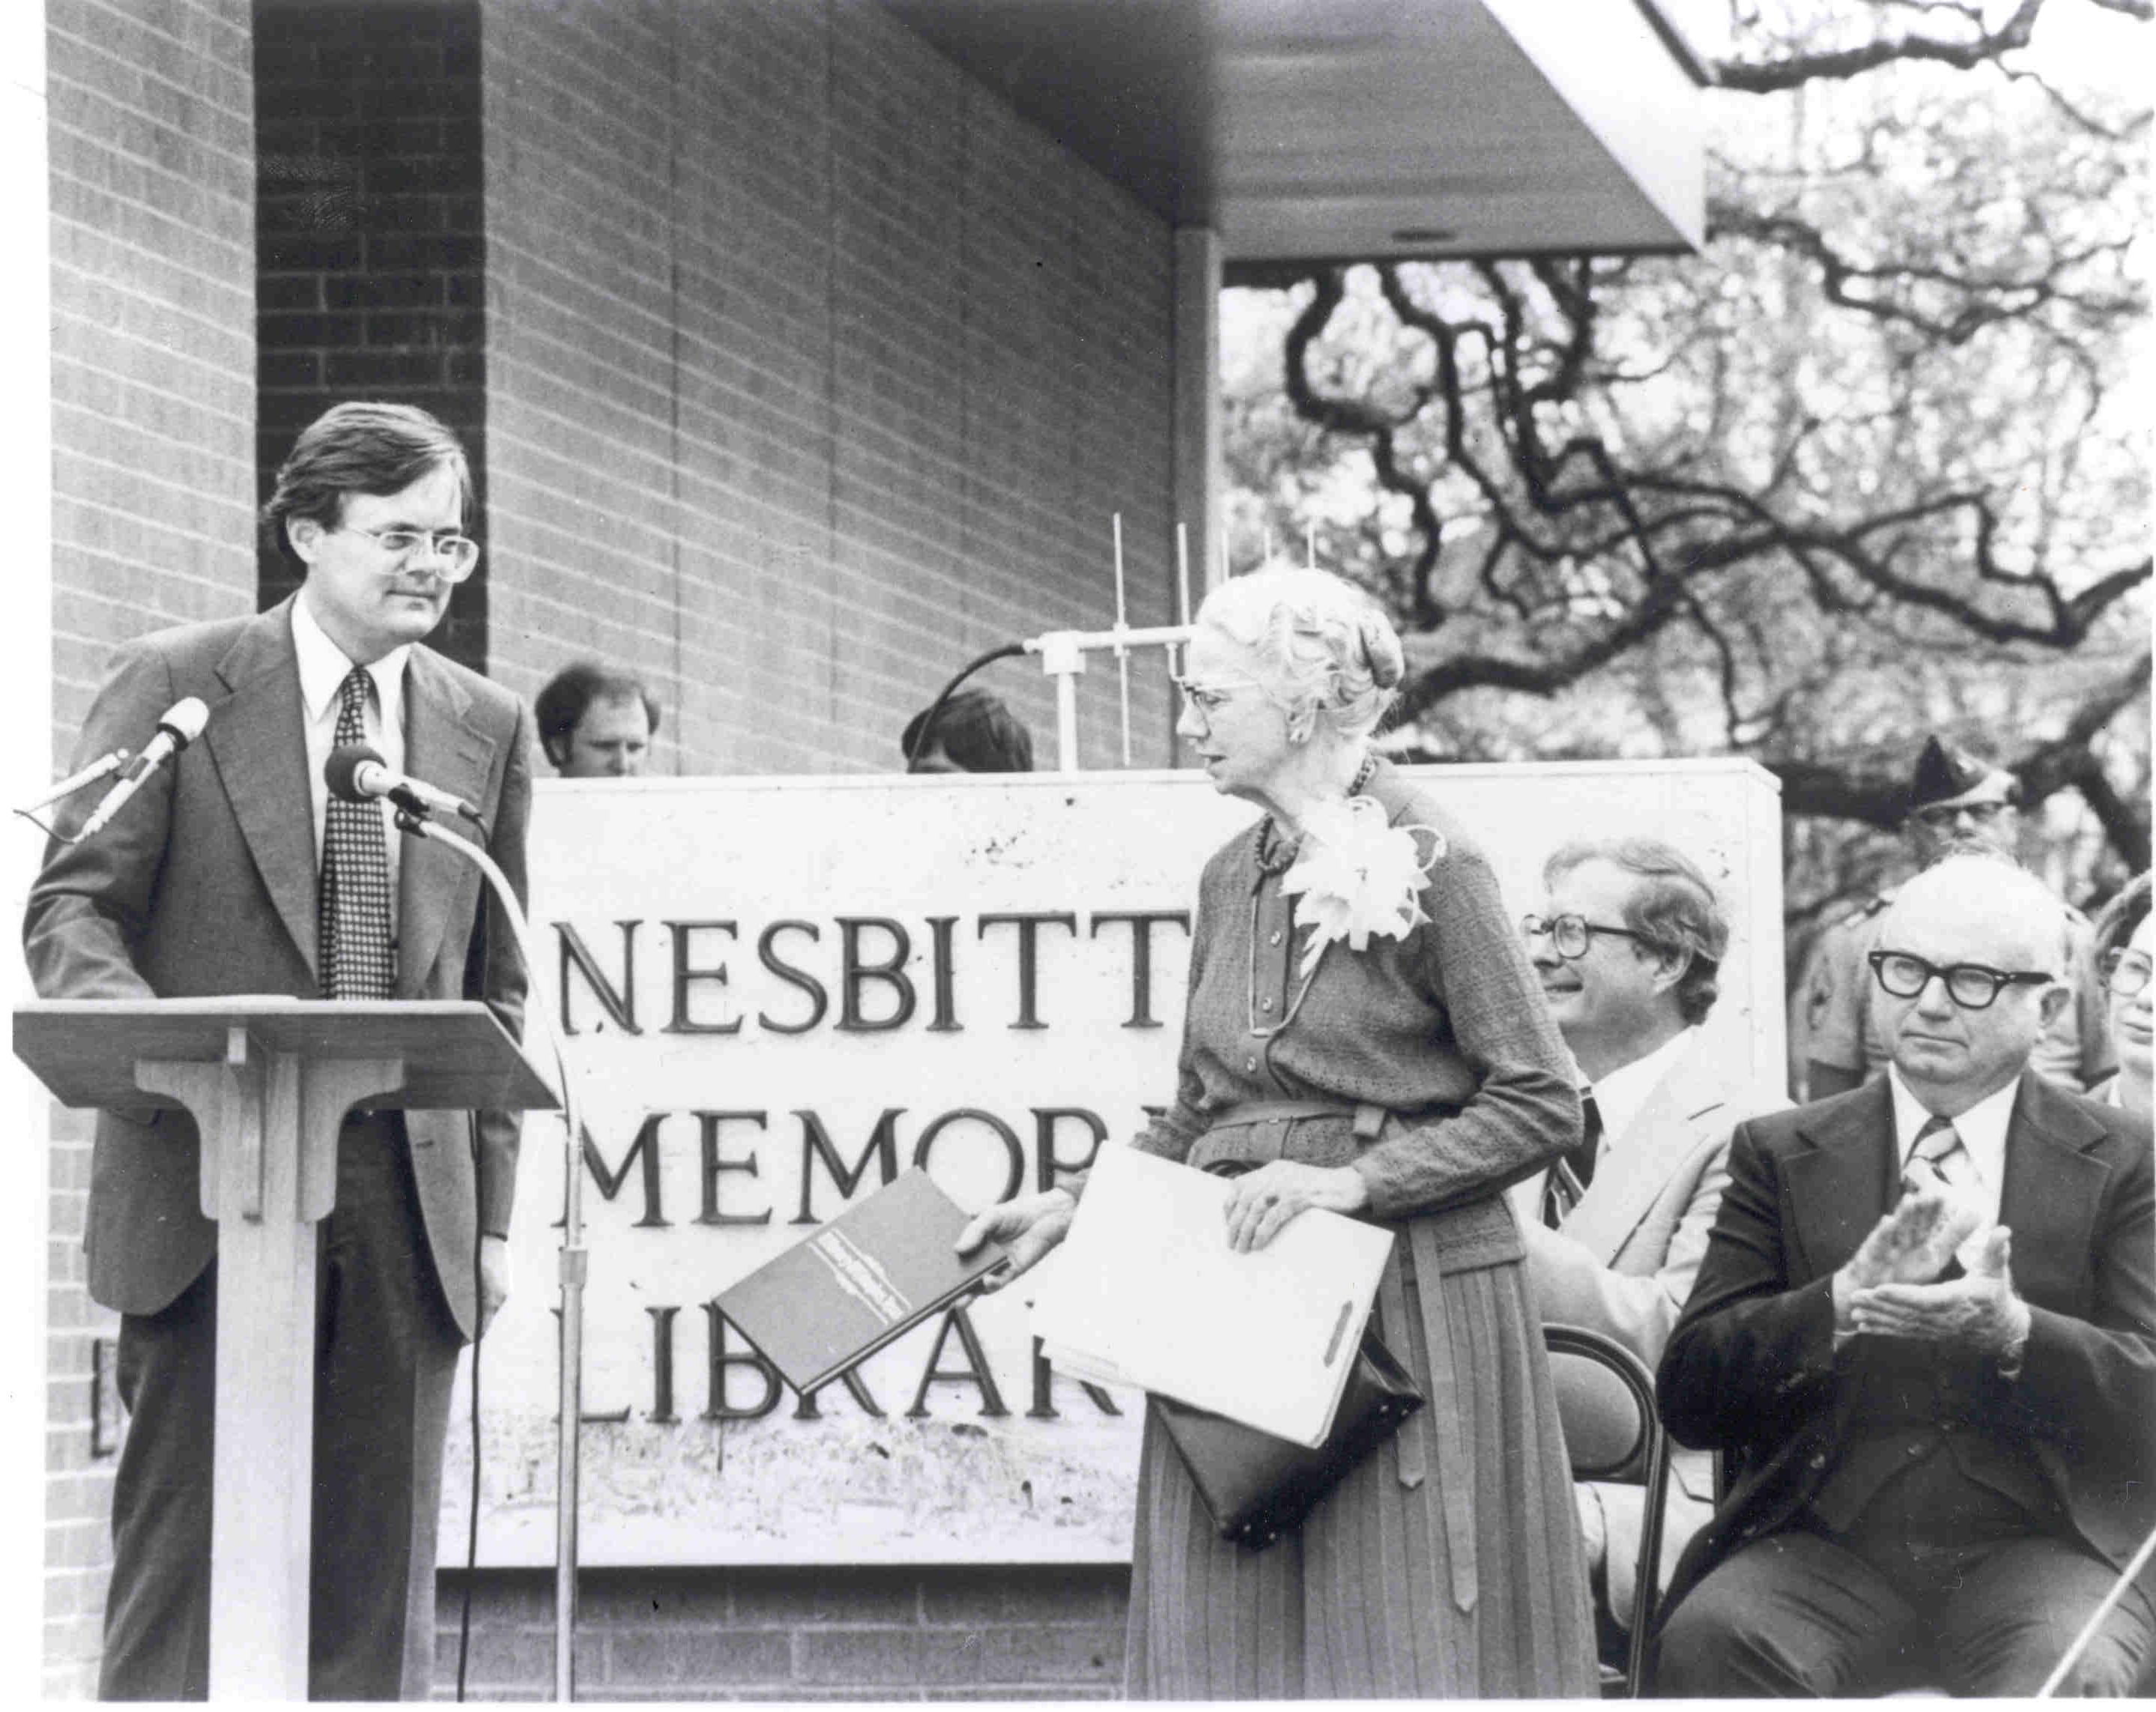 Dedication of the Nesbitt Memorial Library, March 18, 1979